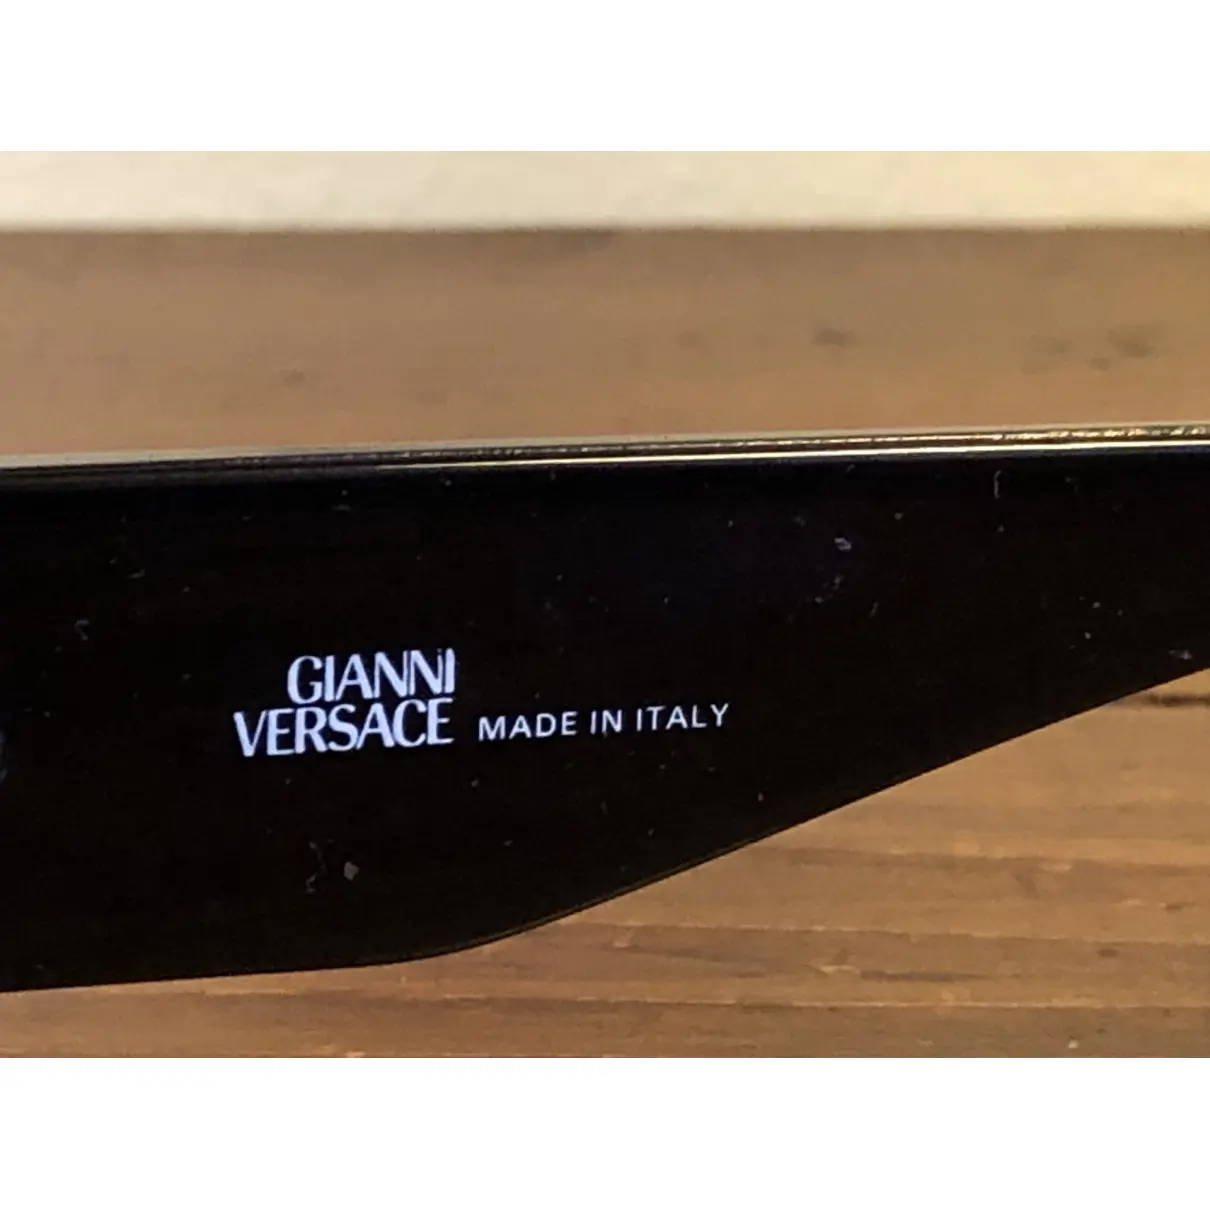 Buy Gianni Versace Sunglasses online